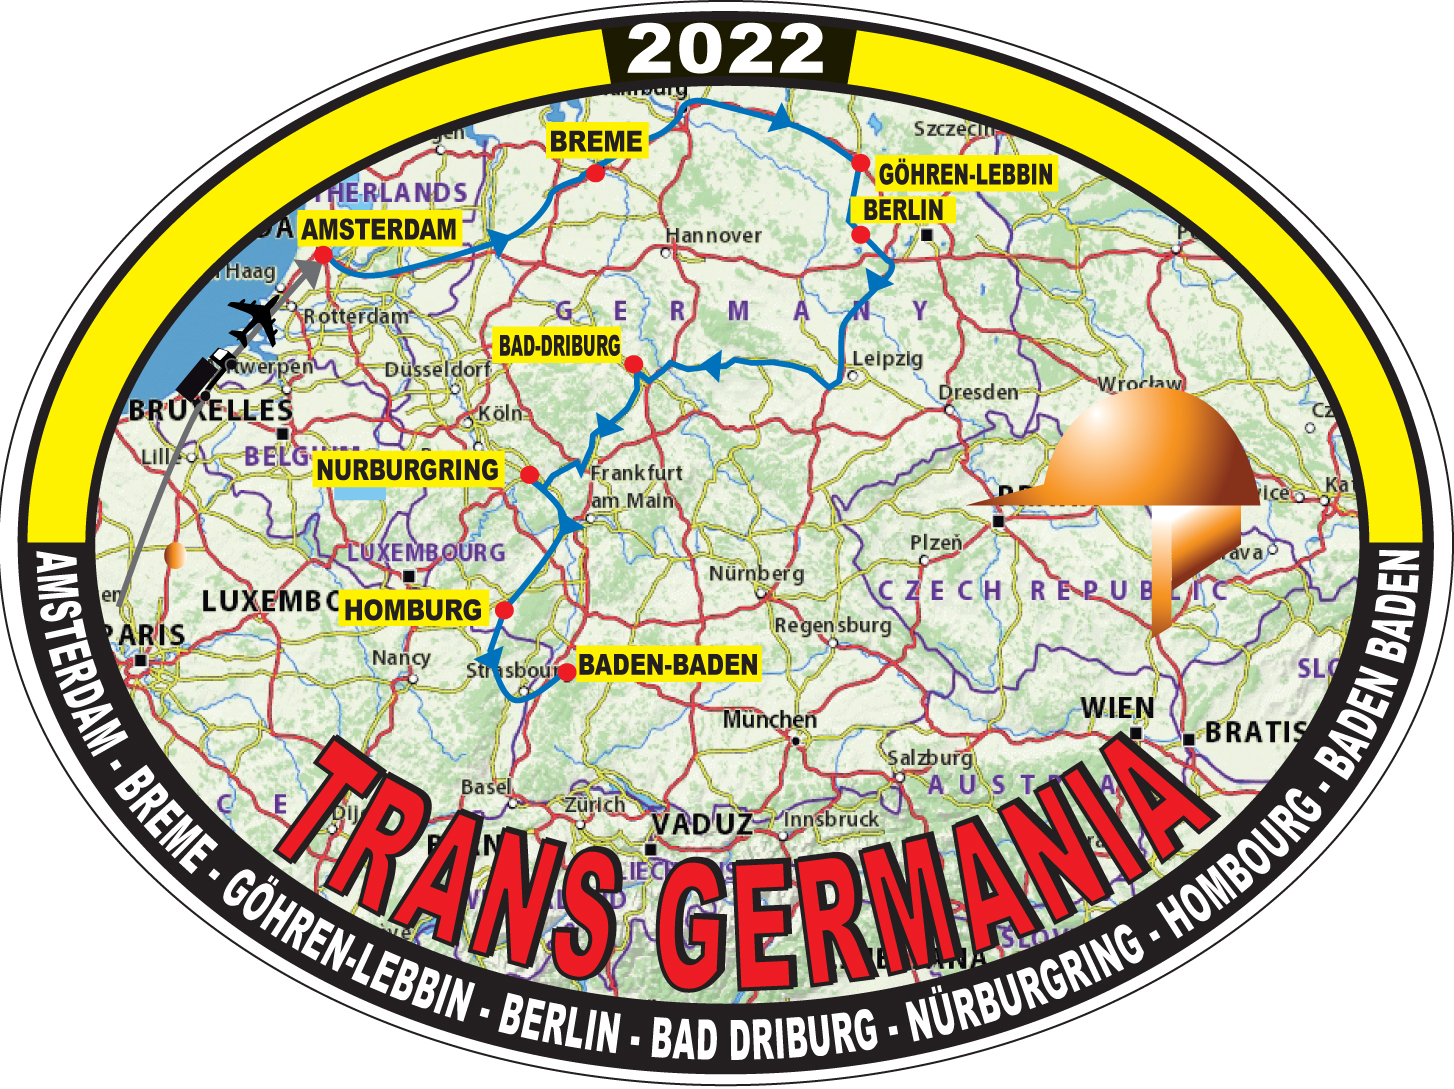 C:\Users\Armandet\Desktop\TRANS GERMANIA 2022\Plaque TRANS GERMANIA 2022.jpg